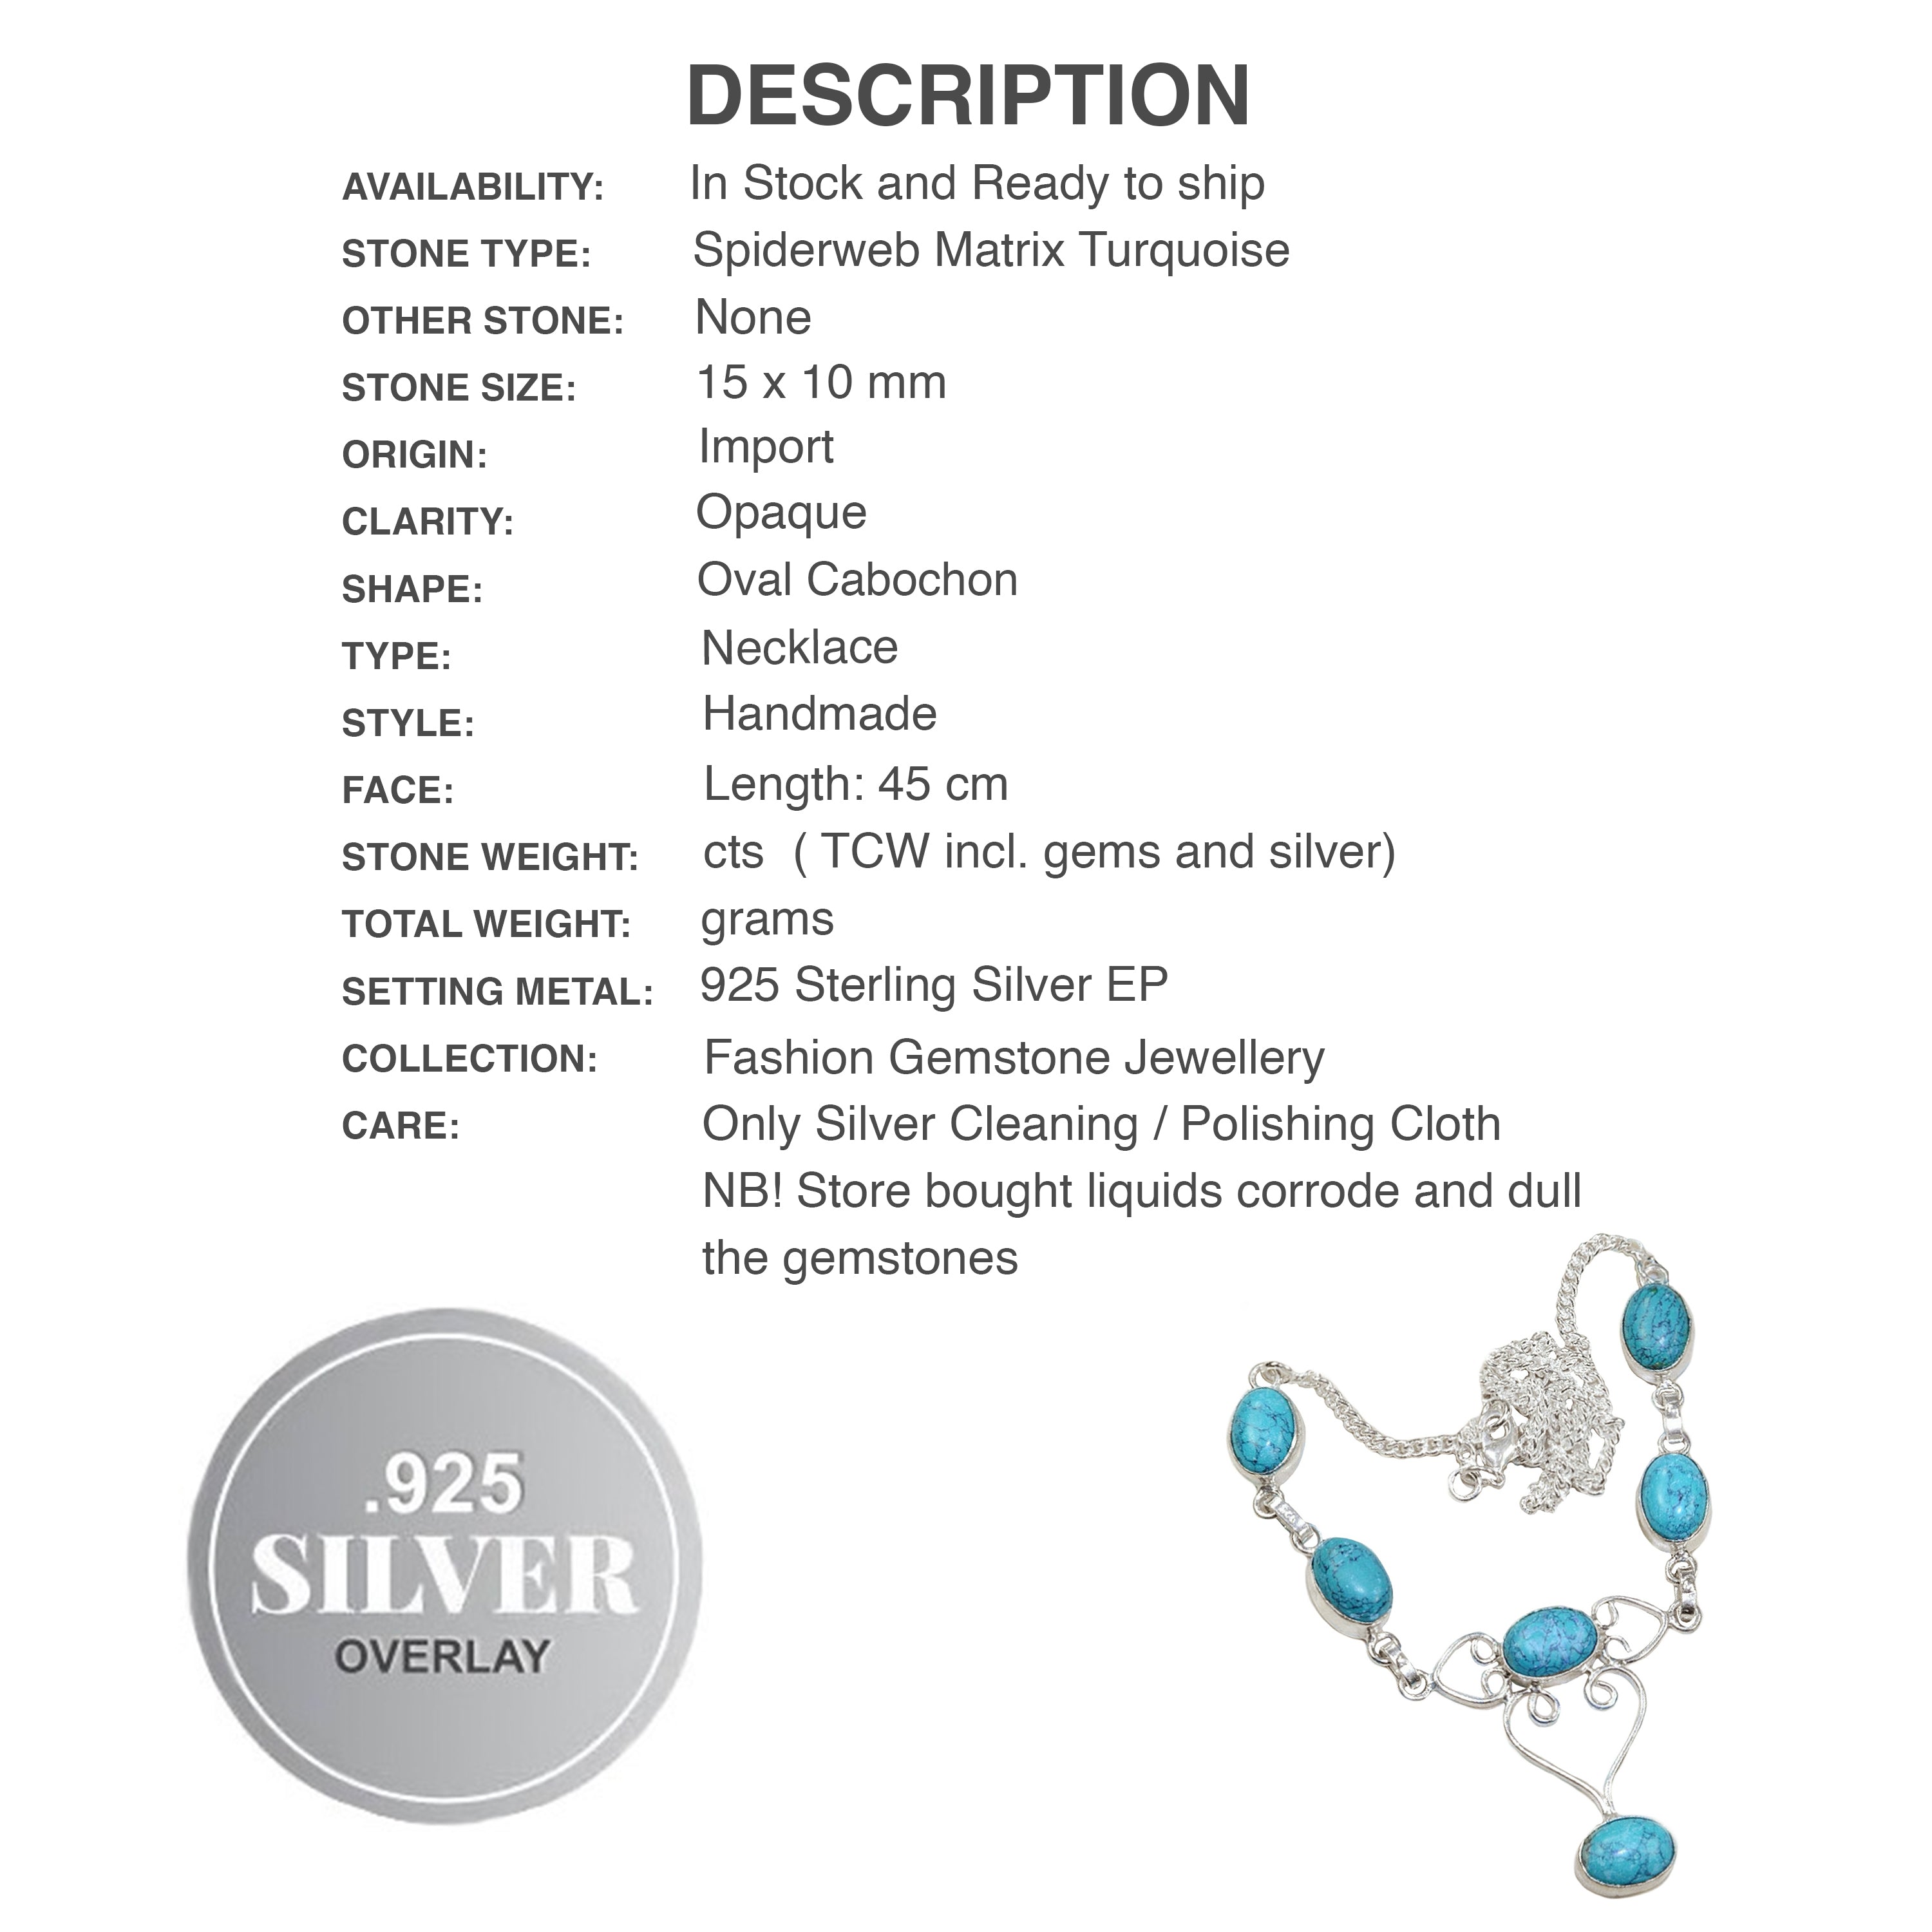 Spider web Matrix Turquoise Gemstone .925 Silver Fashion Necklace